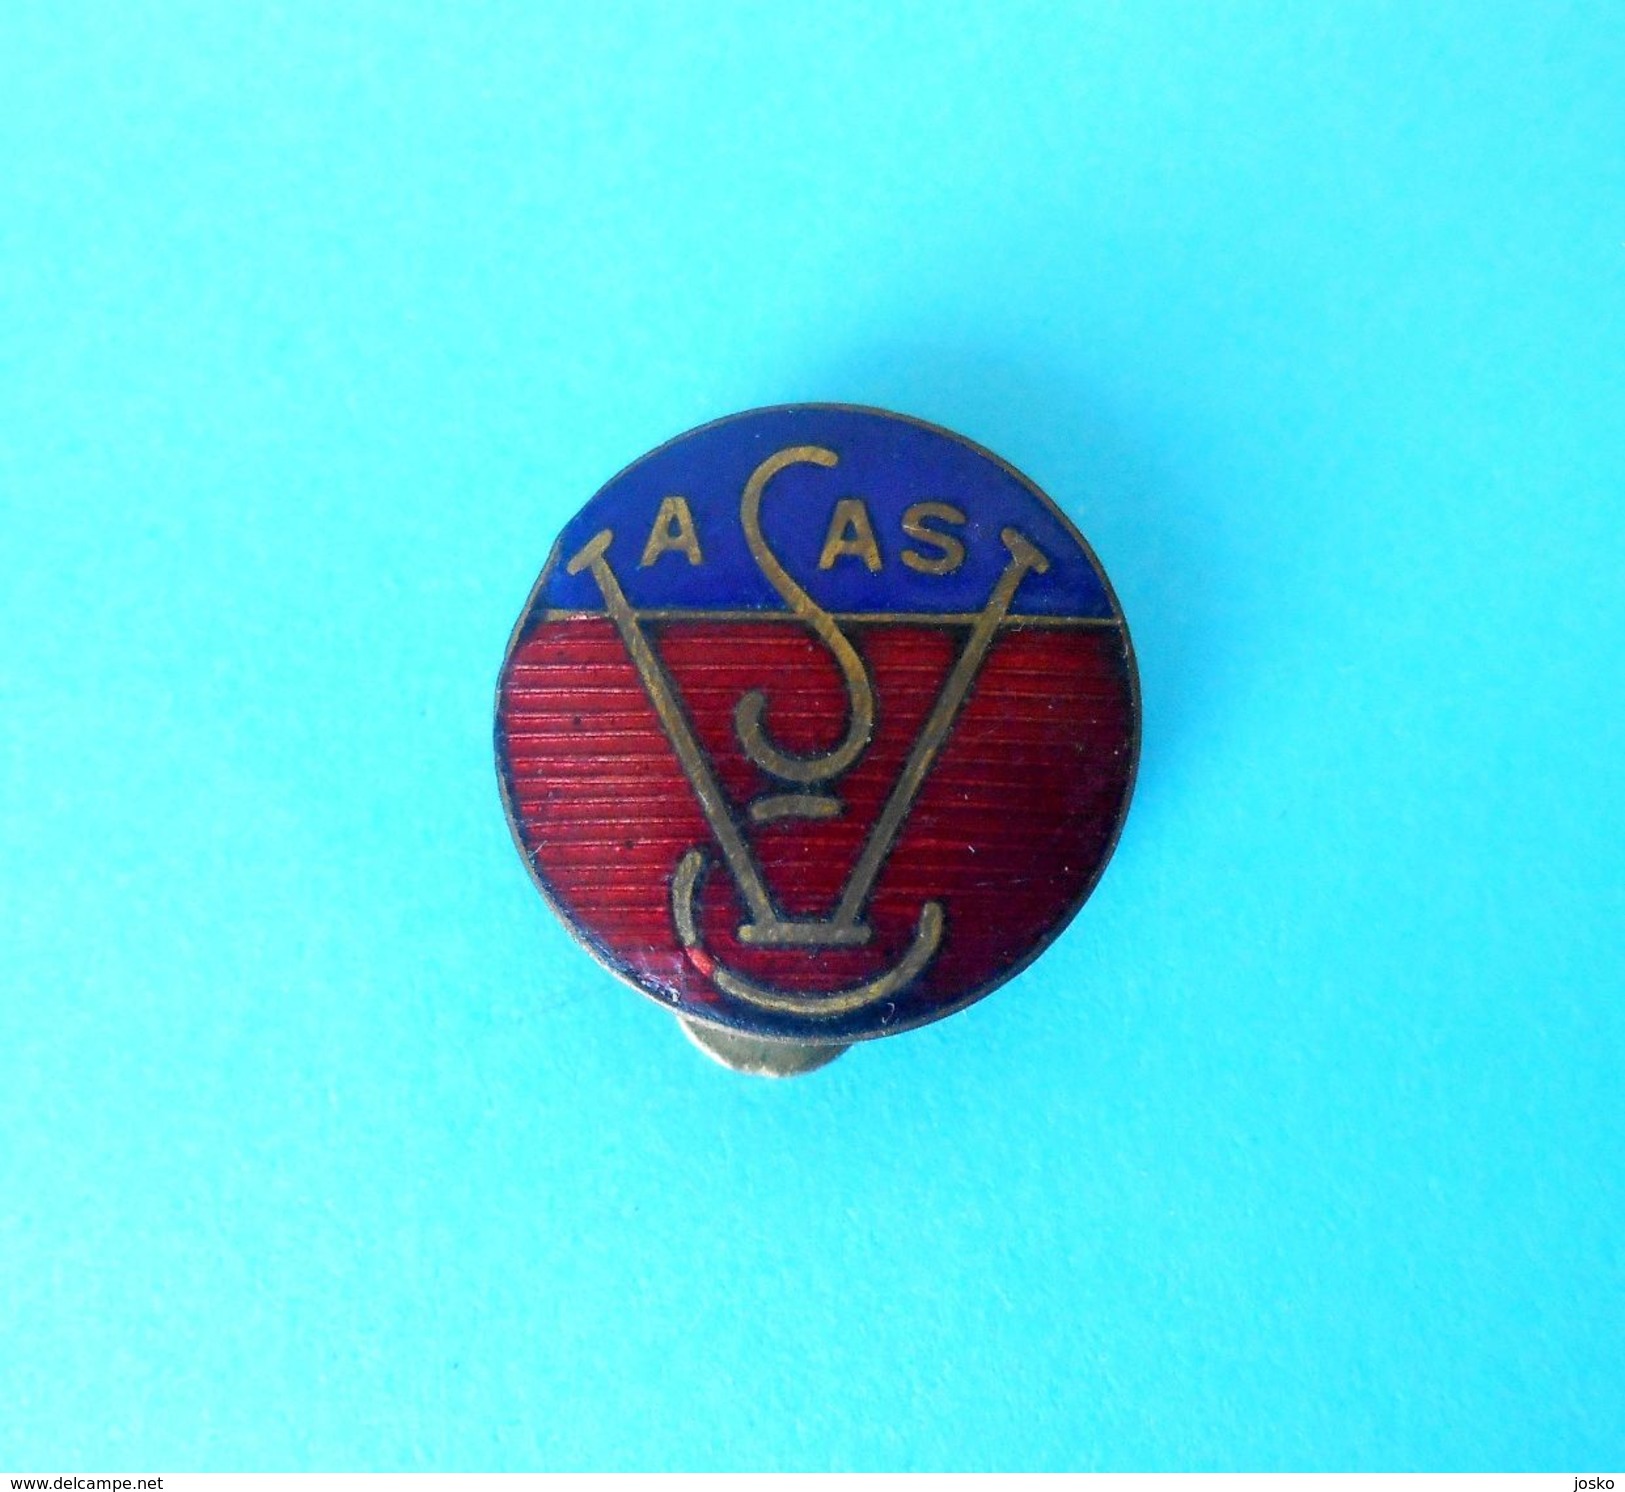 VASAS SC Budapest - Hungary Football Soccer Club Vintage Enamel Buttonhole Pin Badge Fussball Anstecknadel Distintivo - Football